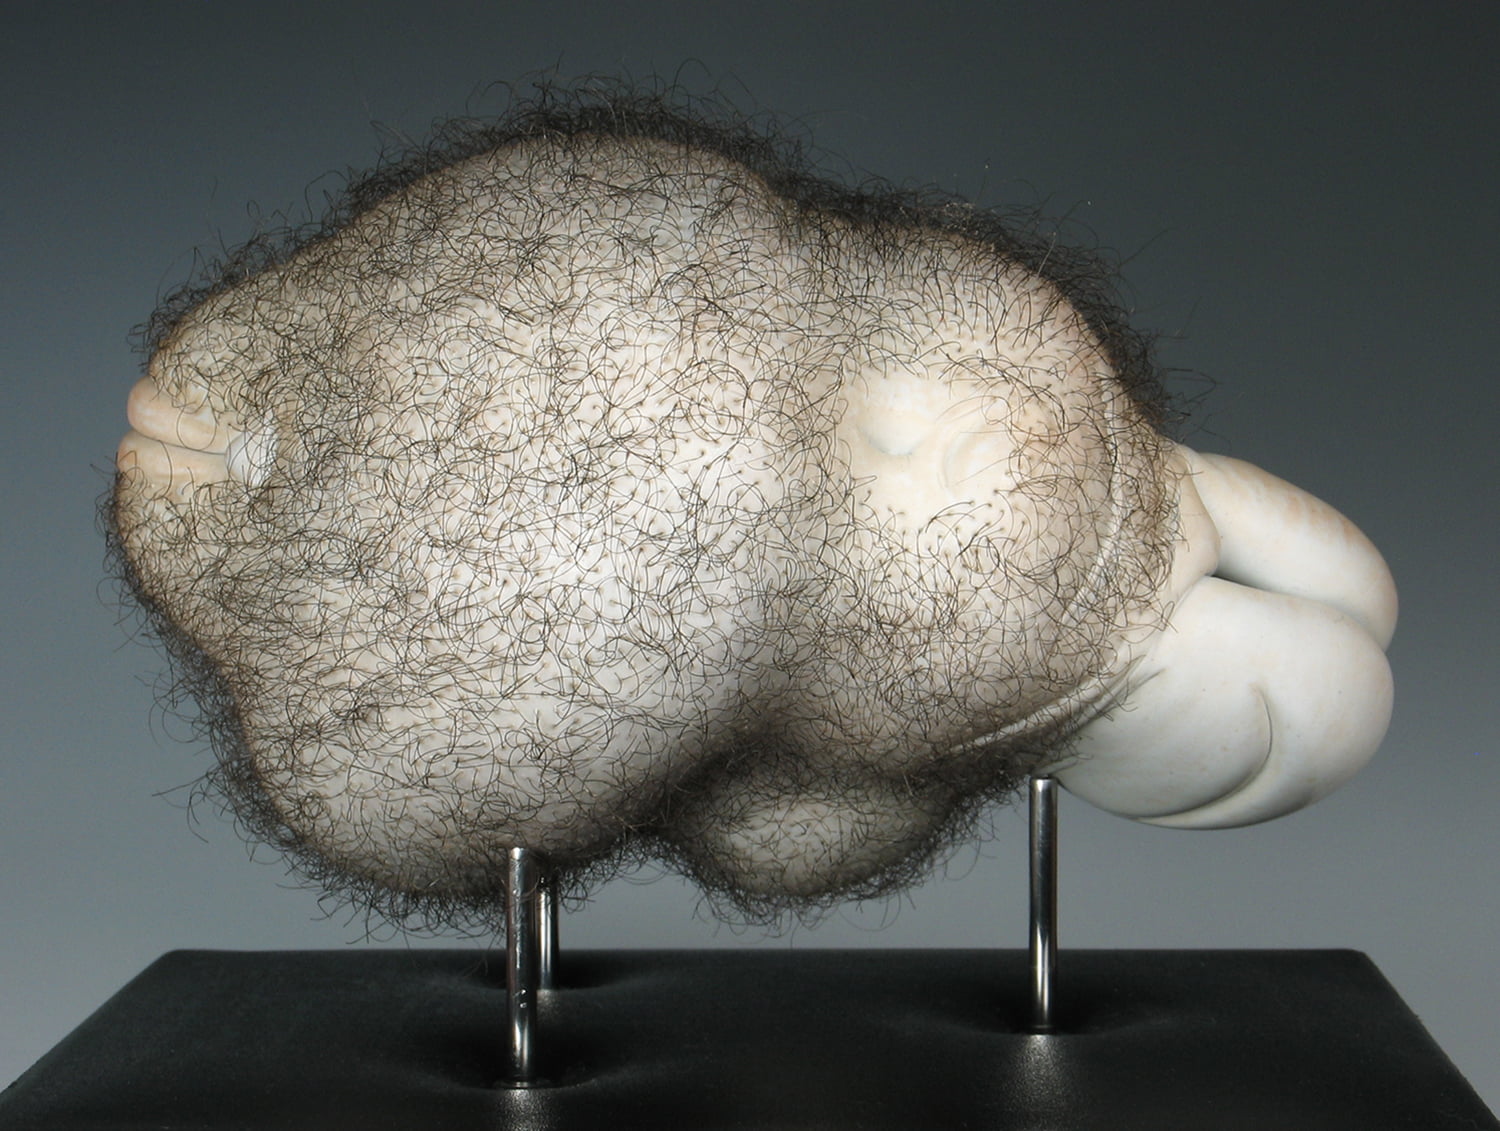 Jason Briggs "Puff" (alternate view). Porcelain and hair sculptural ceramic art.